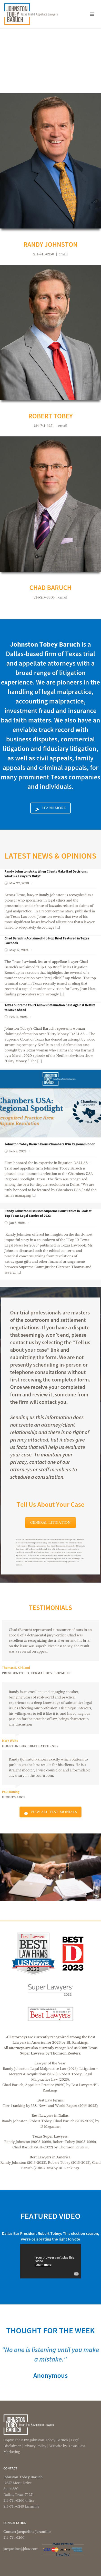 Johnston Tobey - Dallas TX Lawyers